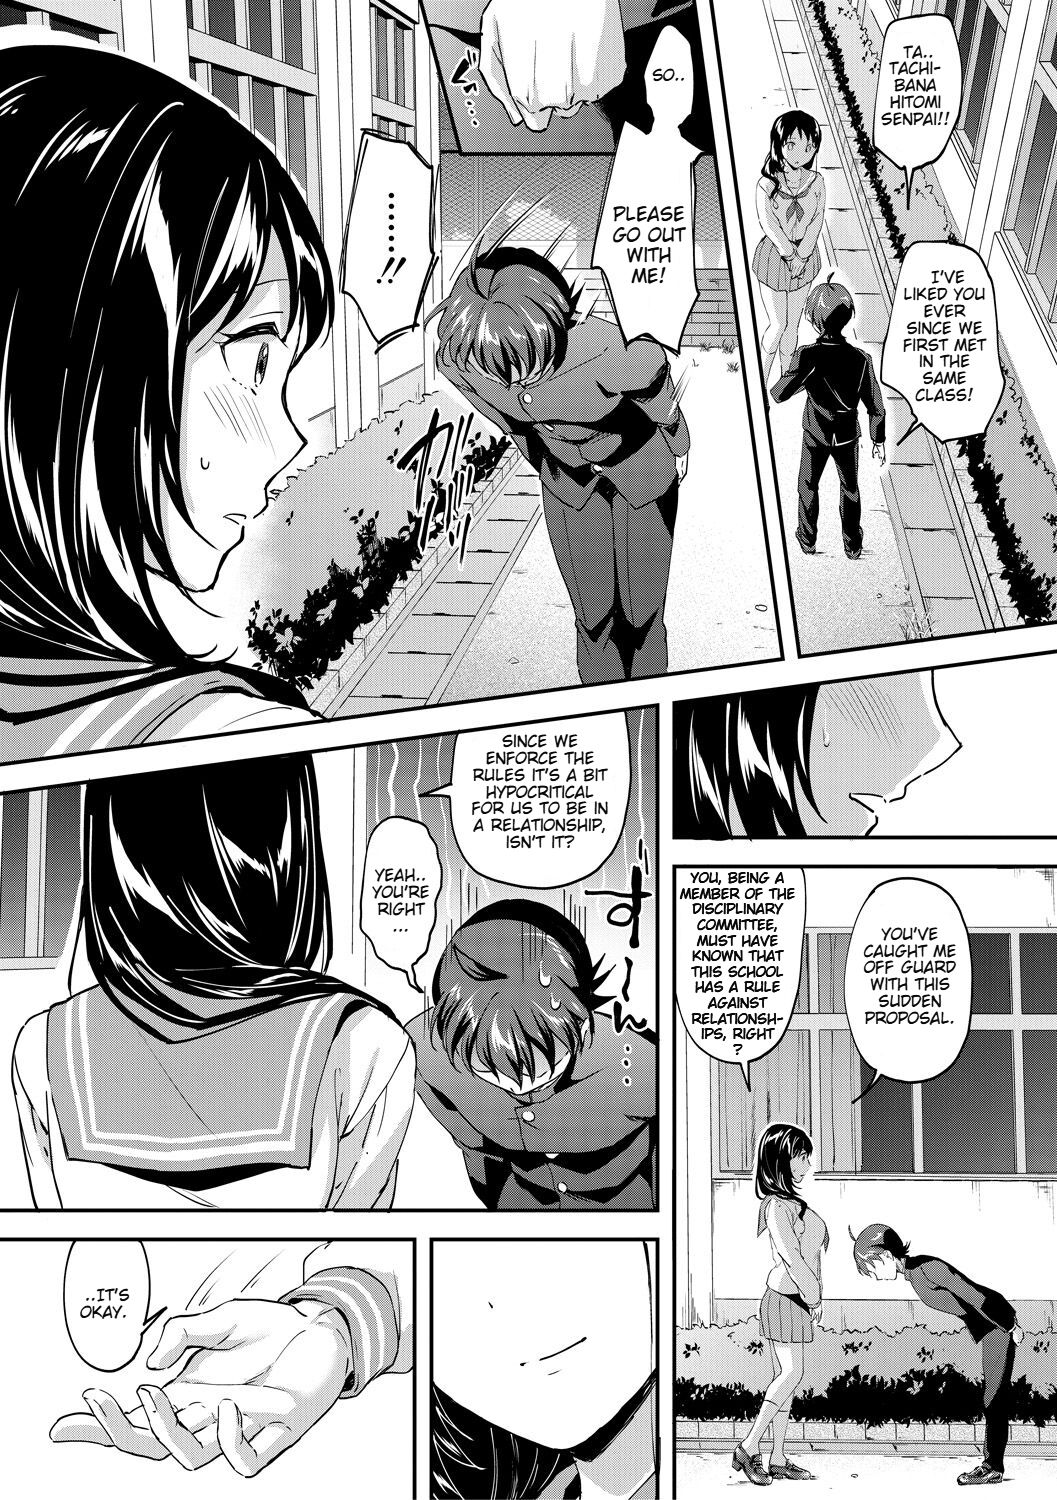 Reverse rape manga